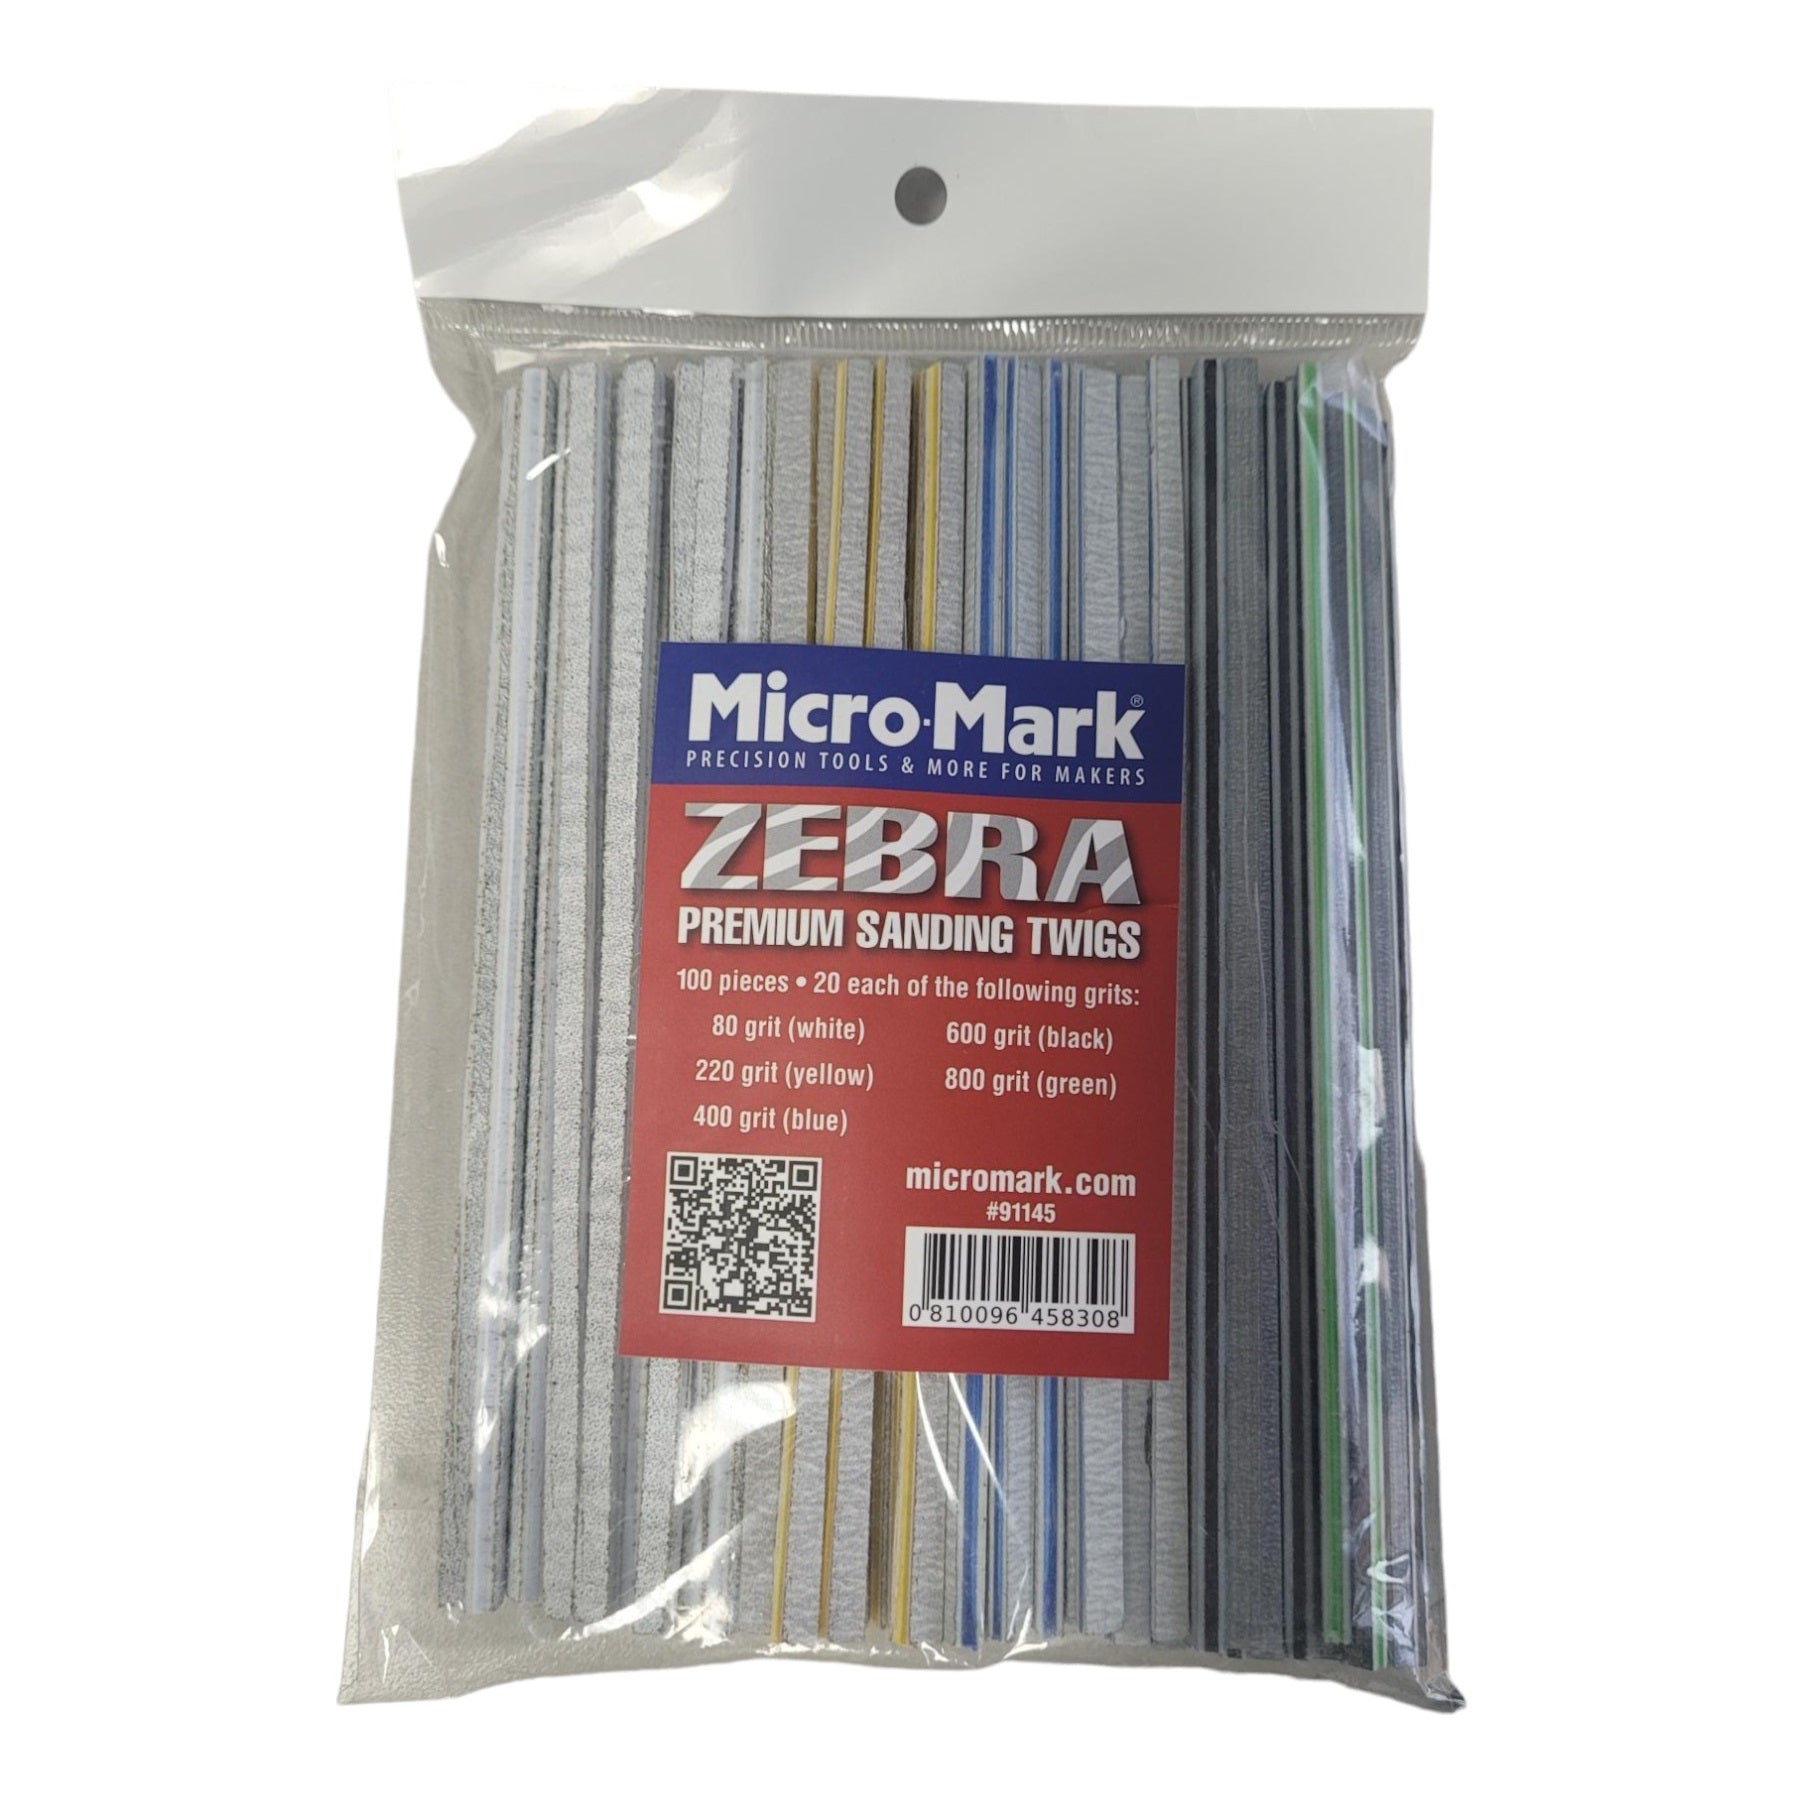 Micro - Mark Zebra Premium Sanding Twigs 100 Pieces - Micro - Mark Sanders